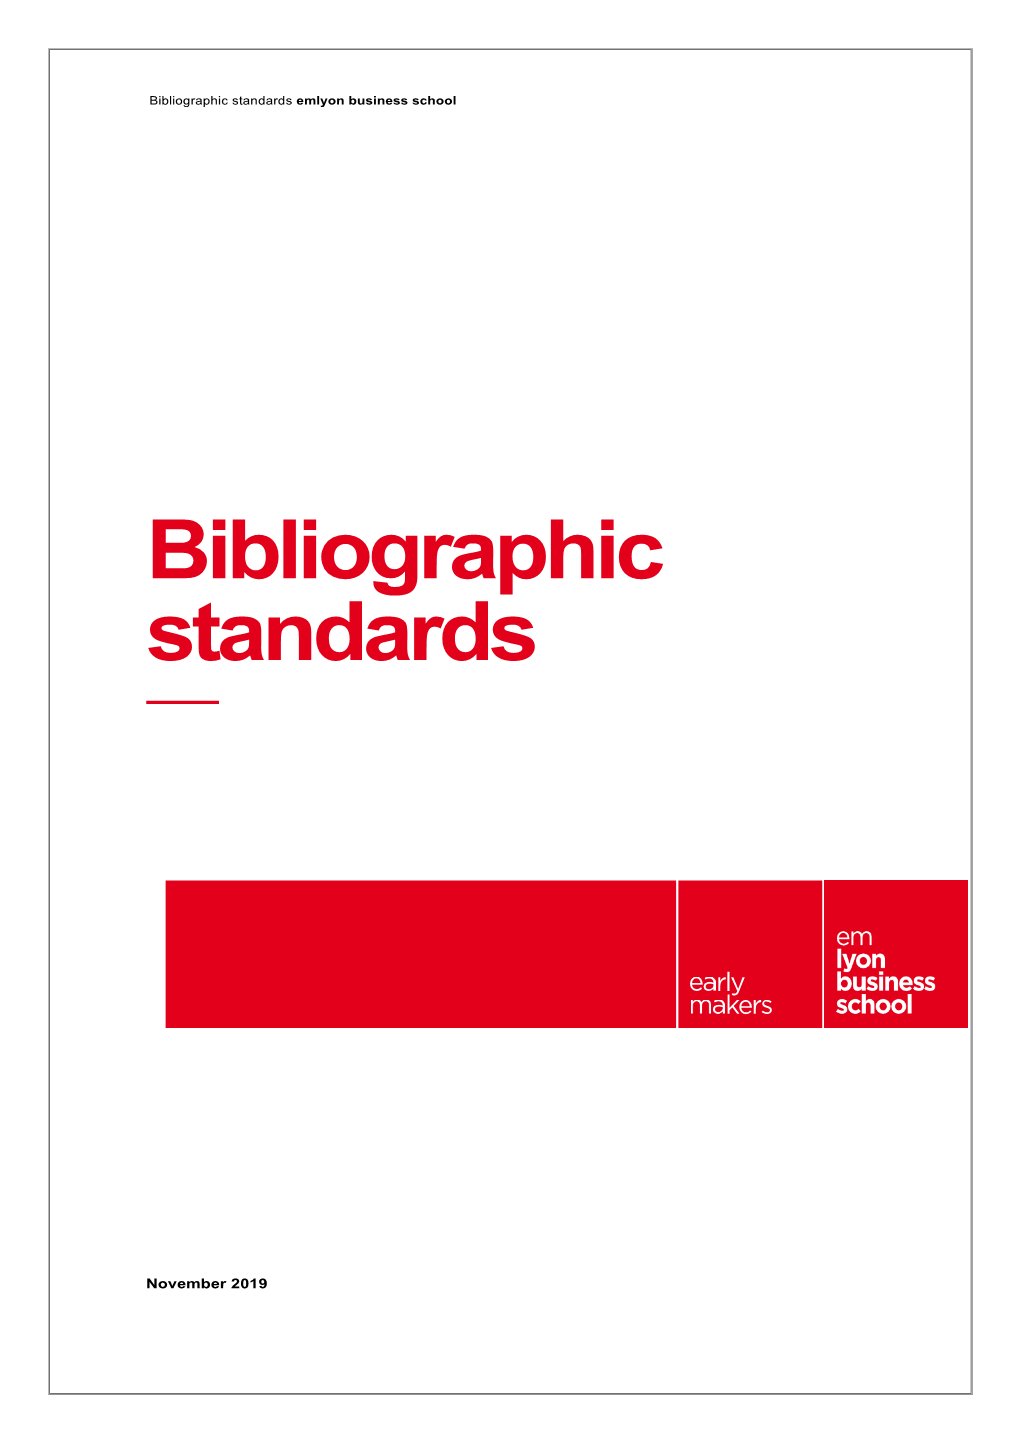 Bibliographic Standards Emlyon Business School